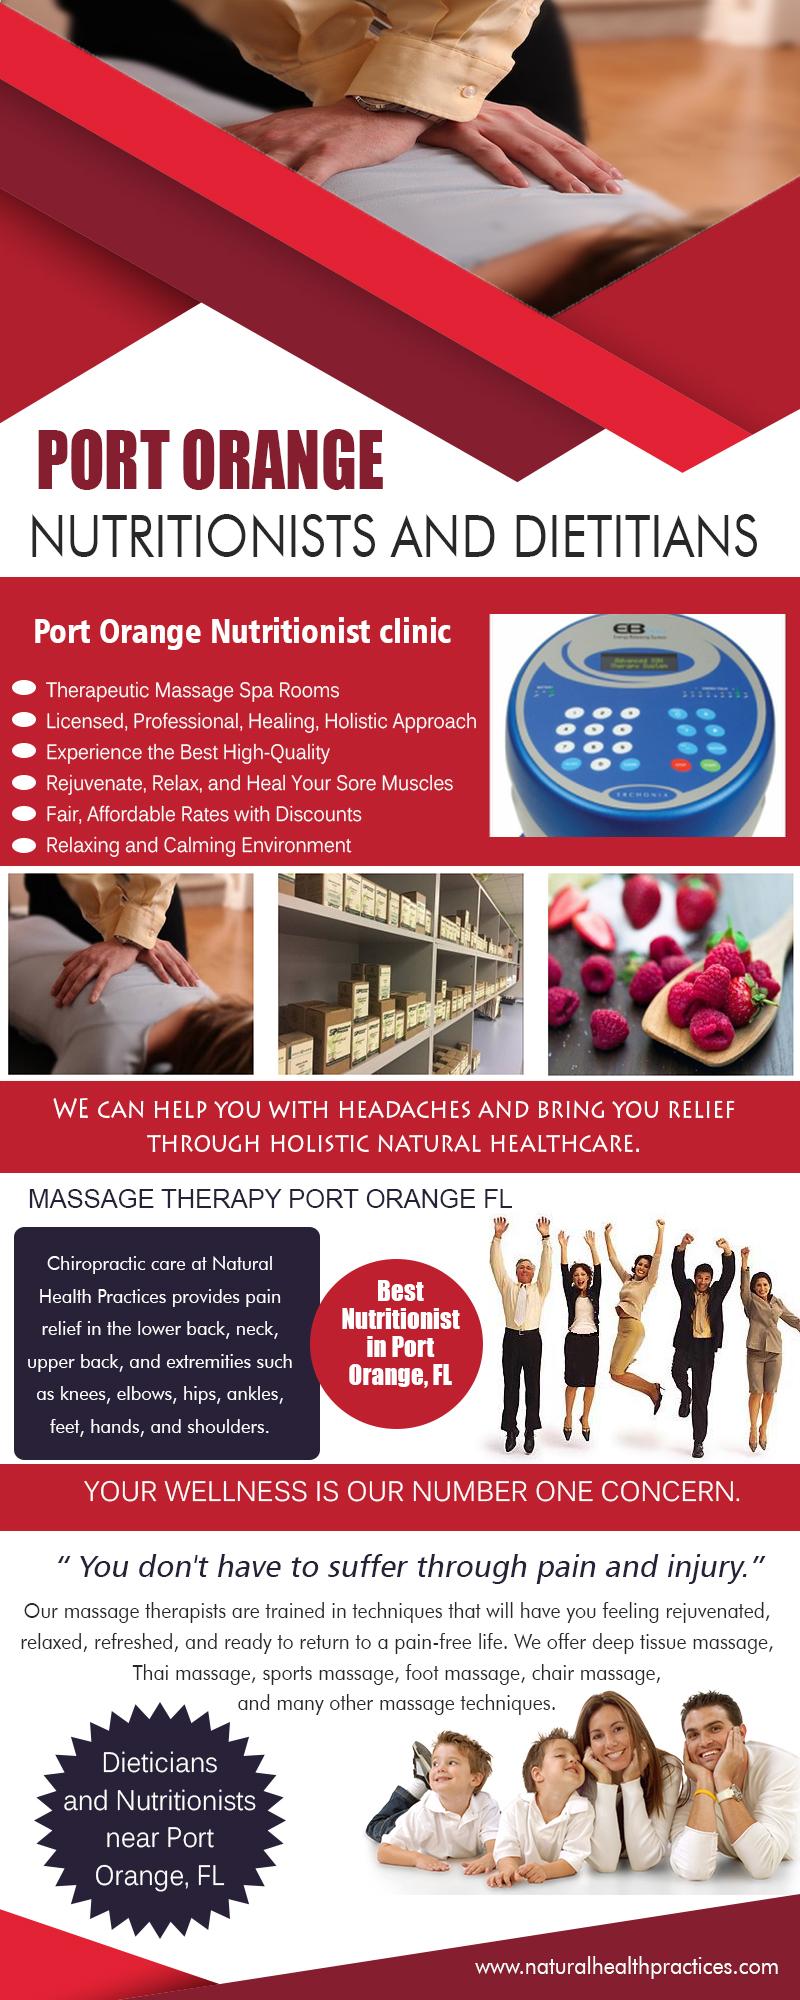 Massage therapy Port Orange, FL